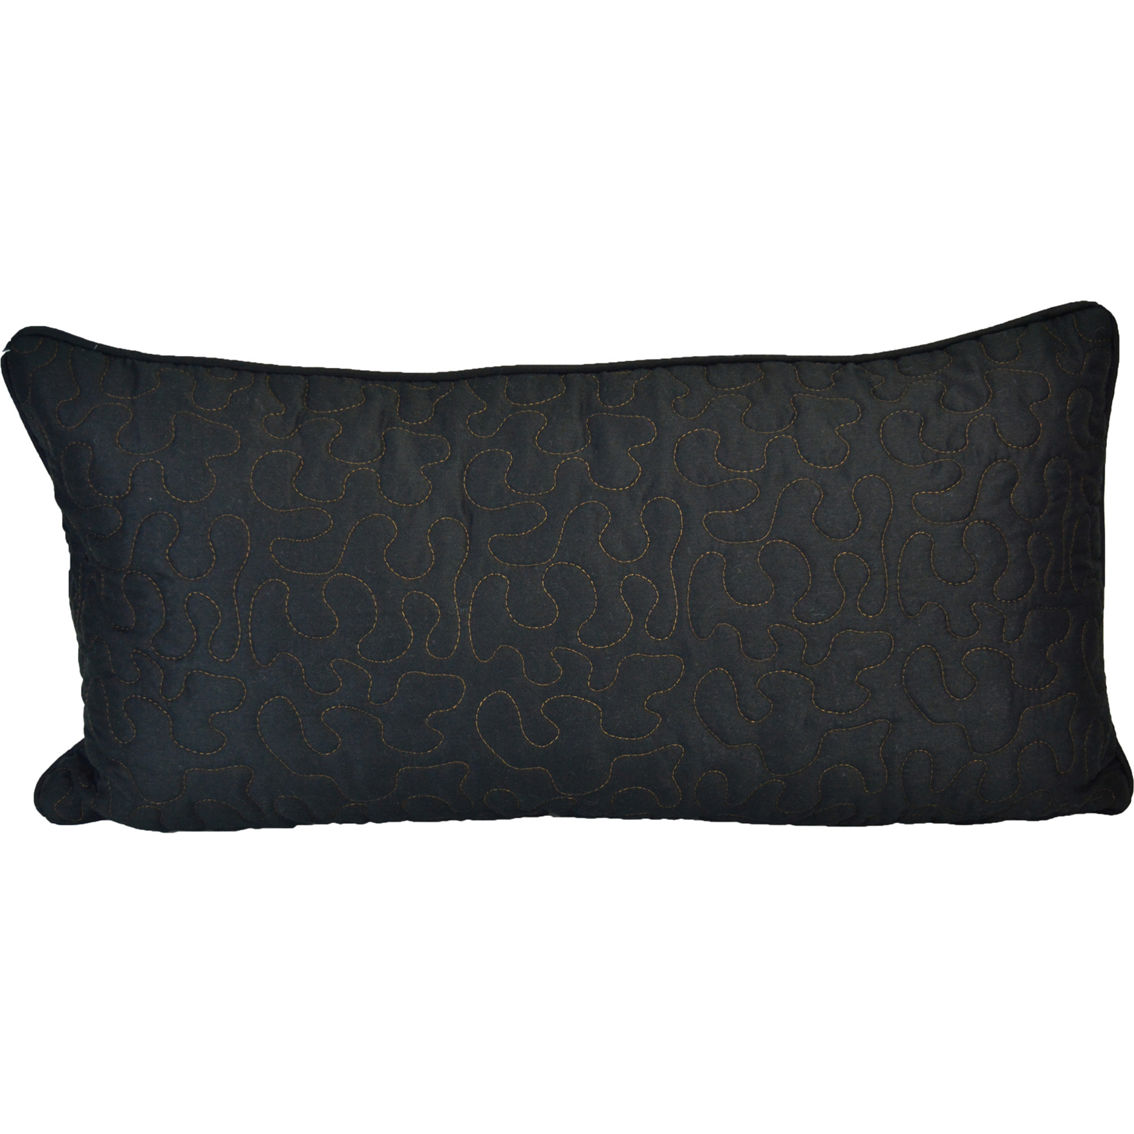 Donna Sharp Bear Walk Plaid Rect Decorative Pillow - Image 2 of 2